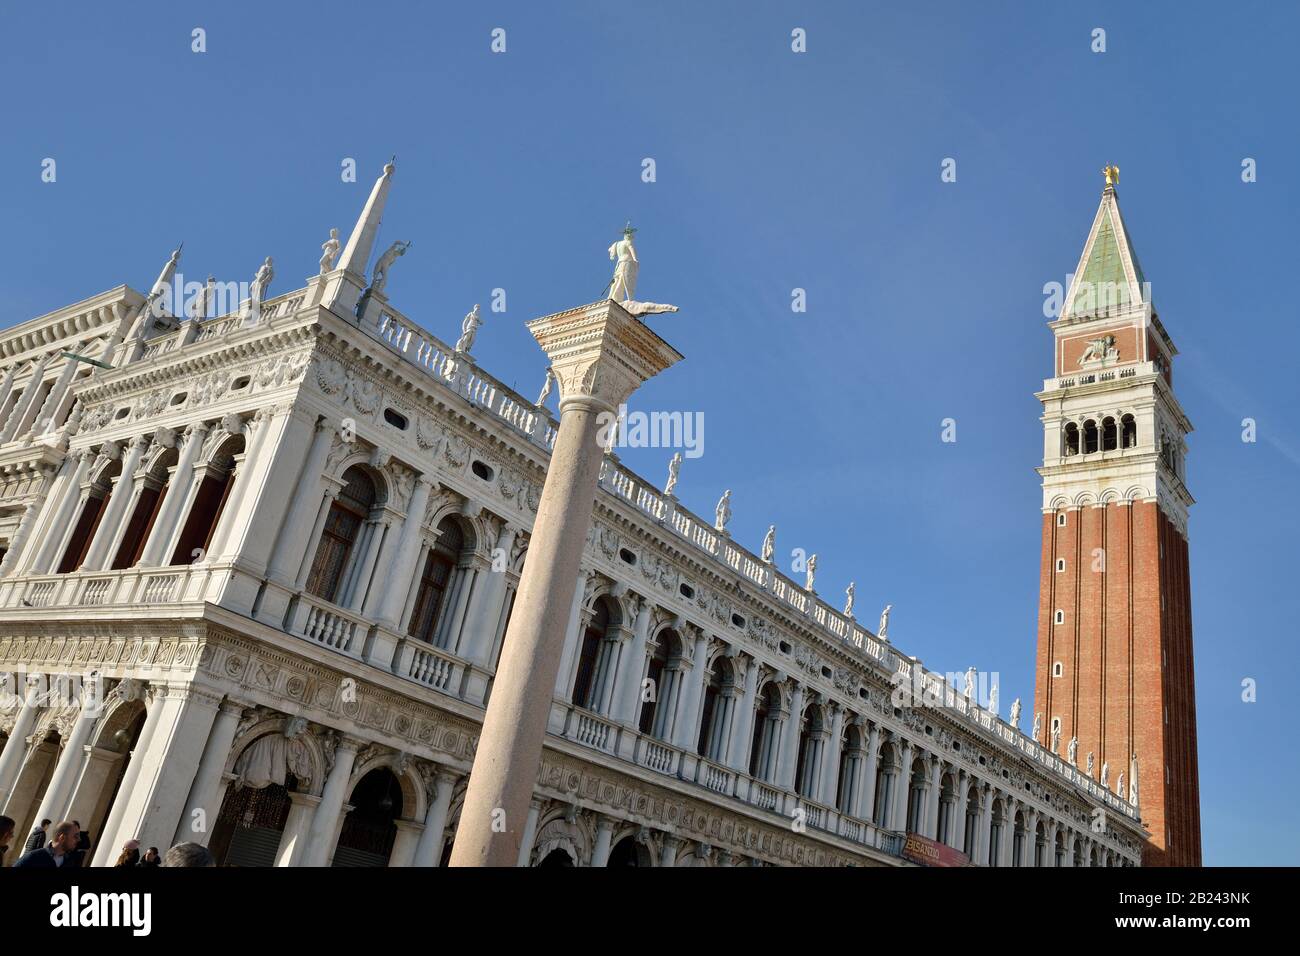 Venecia, Plaza De San Marcos - Piazza San Marco (Biblioteca Nacional Marciana - Biblioteca Sansovino), Patrimonio De La Humanidad De La Unesco - Veneto, Italia, Europa Foto de stock